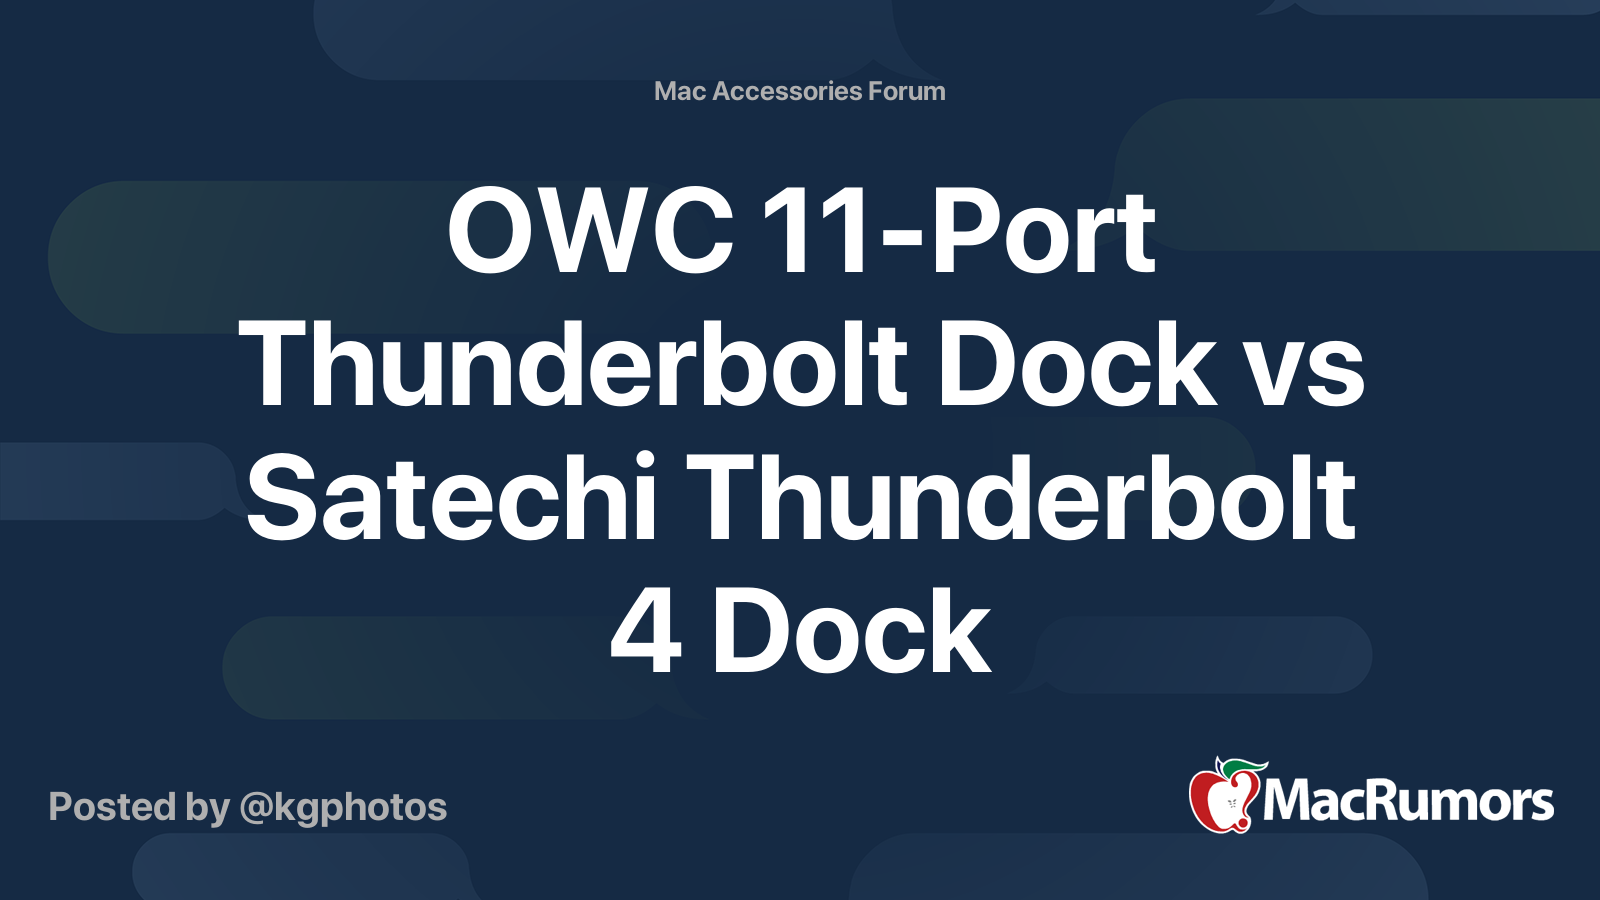 OWC 11-Port Thunderbolt Dock